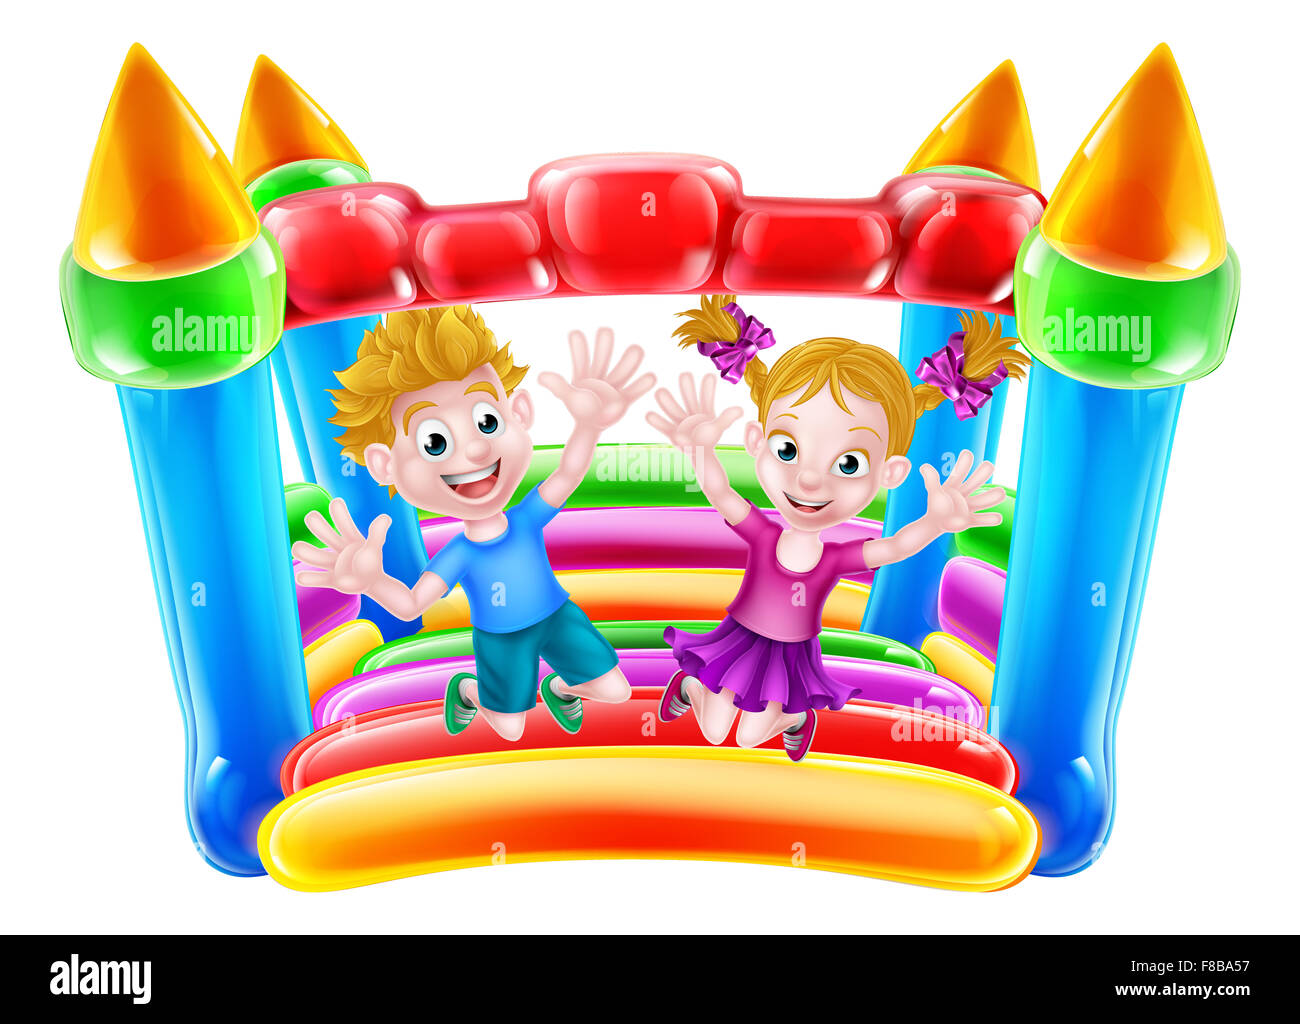 Cartoon boy and girl jumping on a bouncy castle Stock Photo